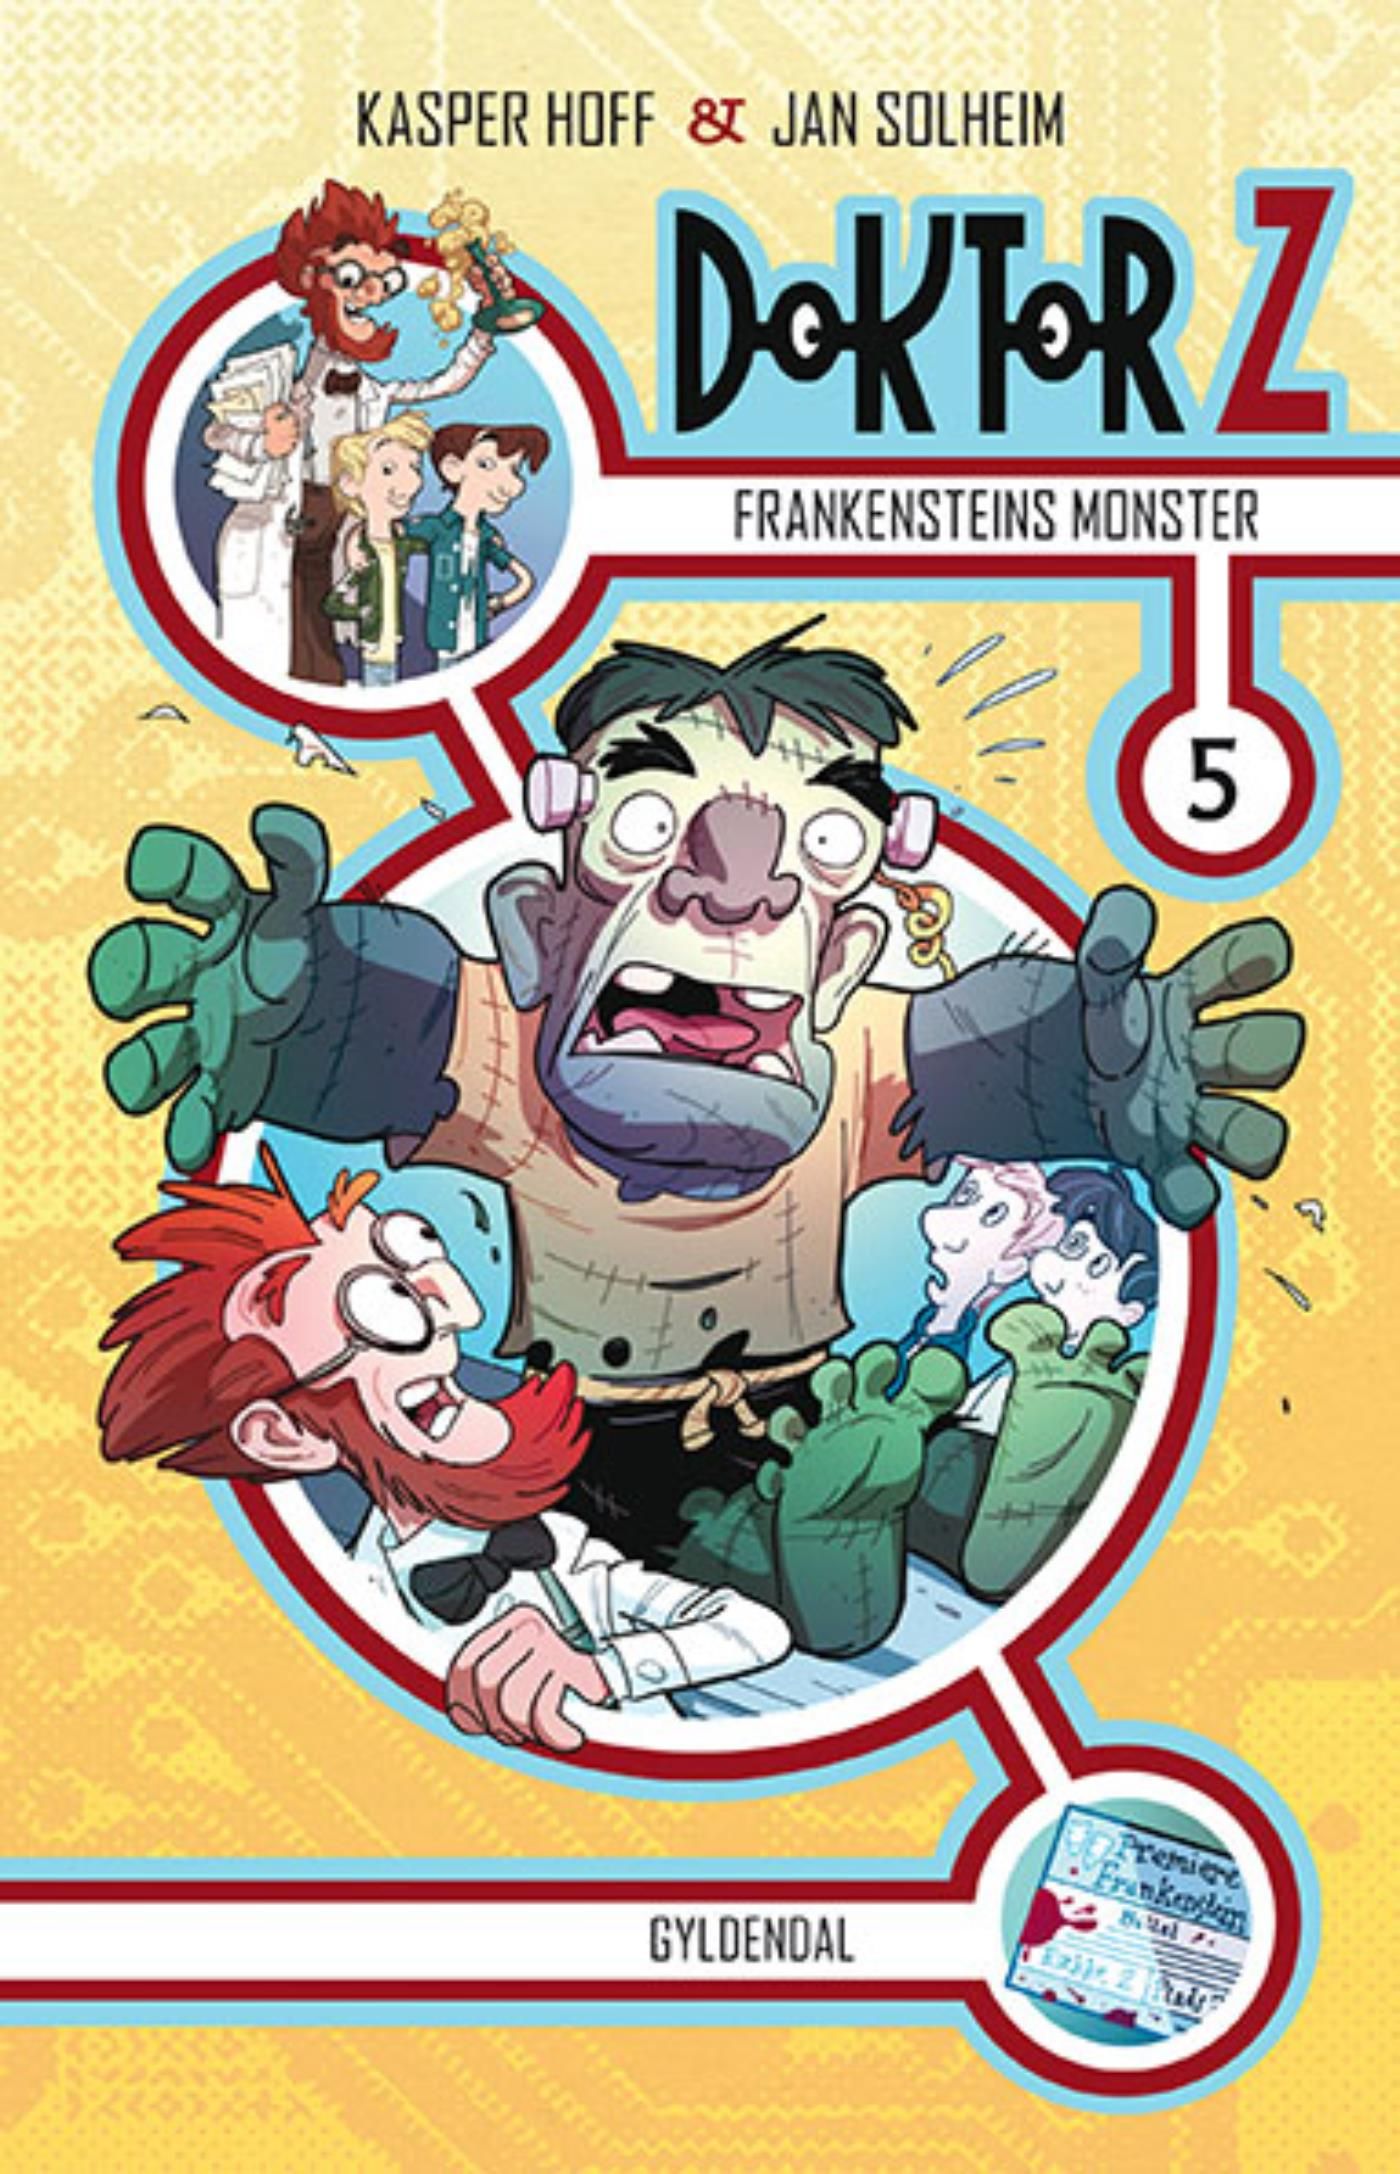 Doktor Z 5 - Frankensteins monster, eBook by Kasper Hoff